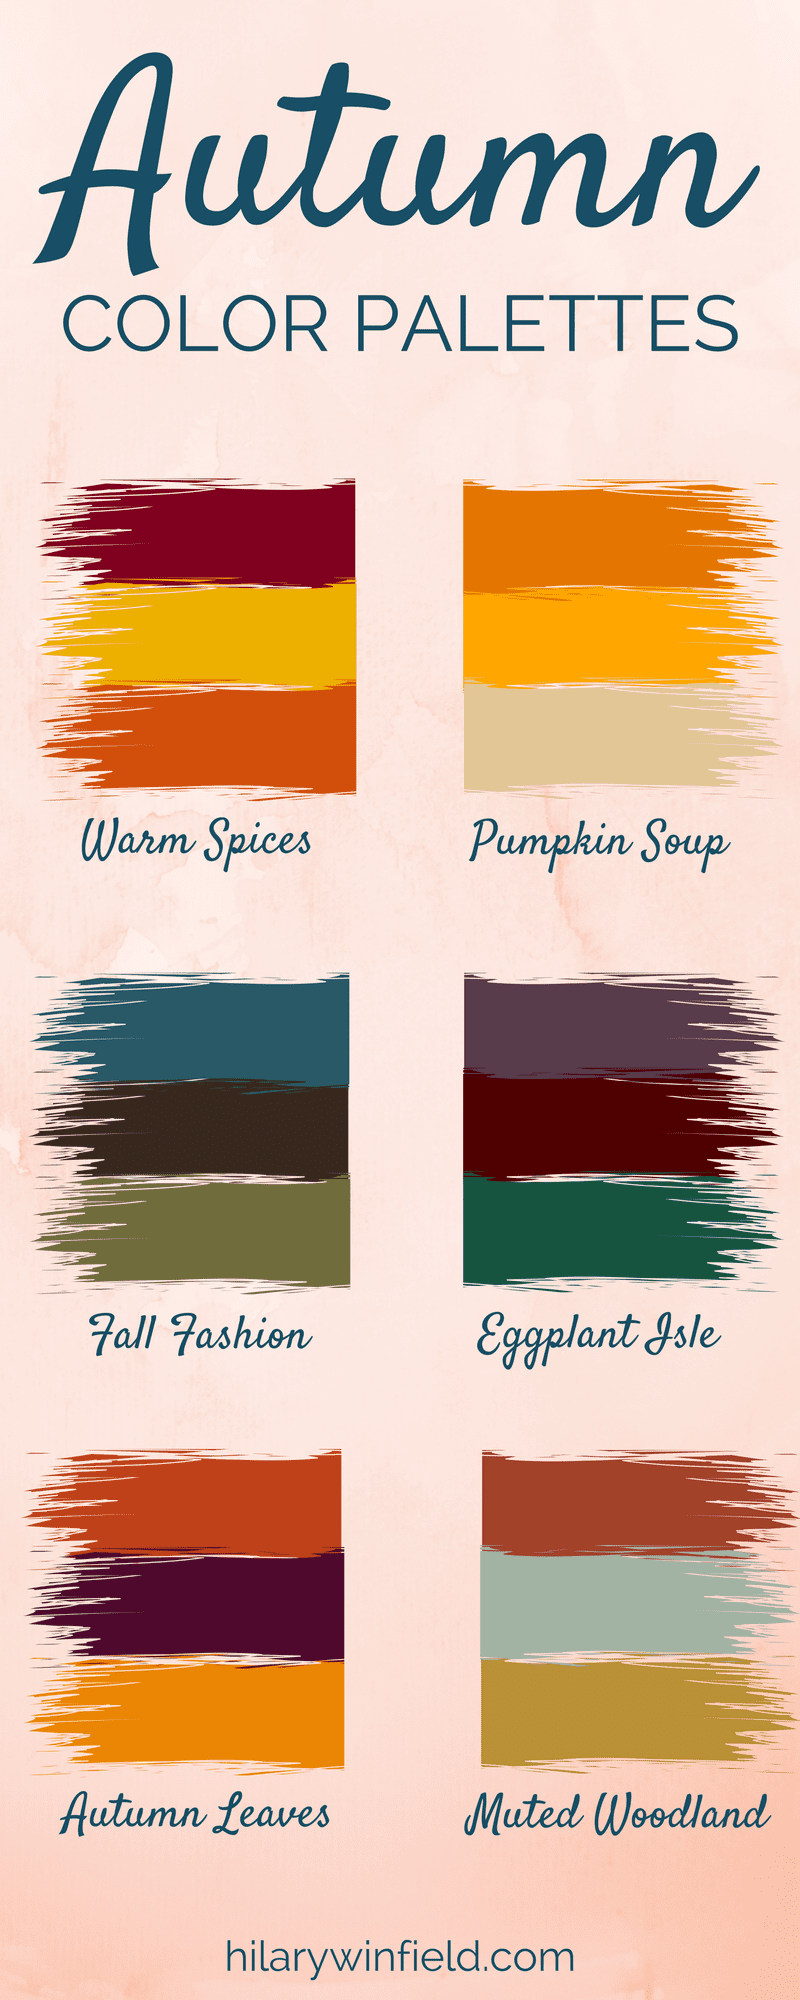 Autumn Color Palettes | Hilary Winfield